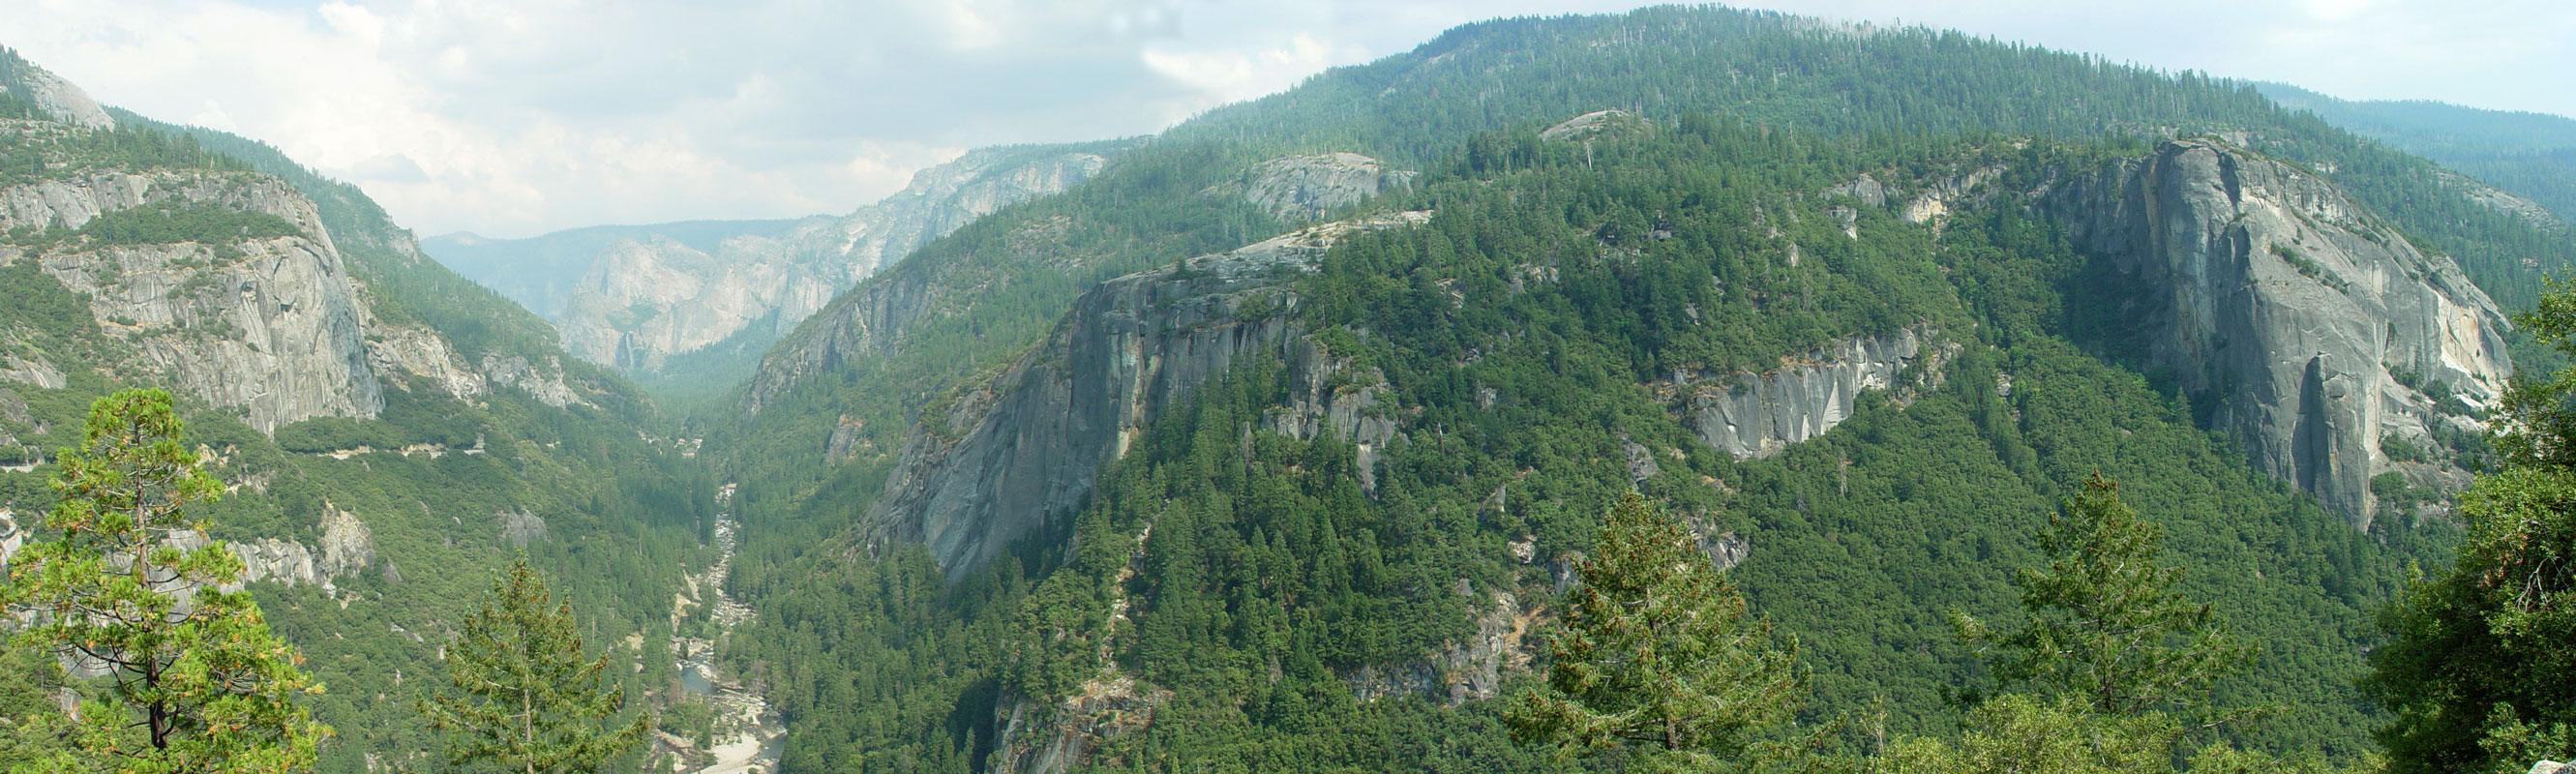 Yosemite, California from Hwy 120